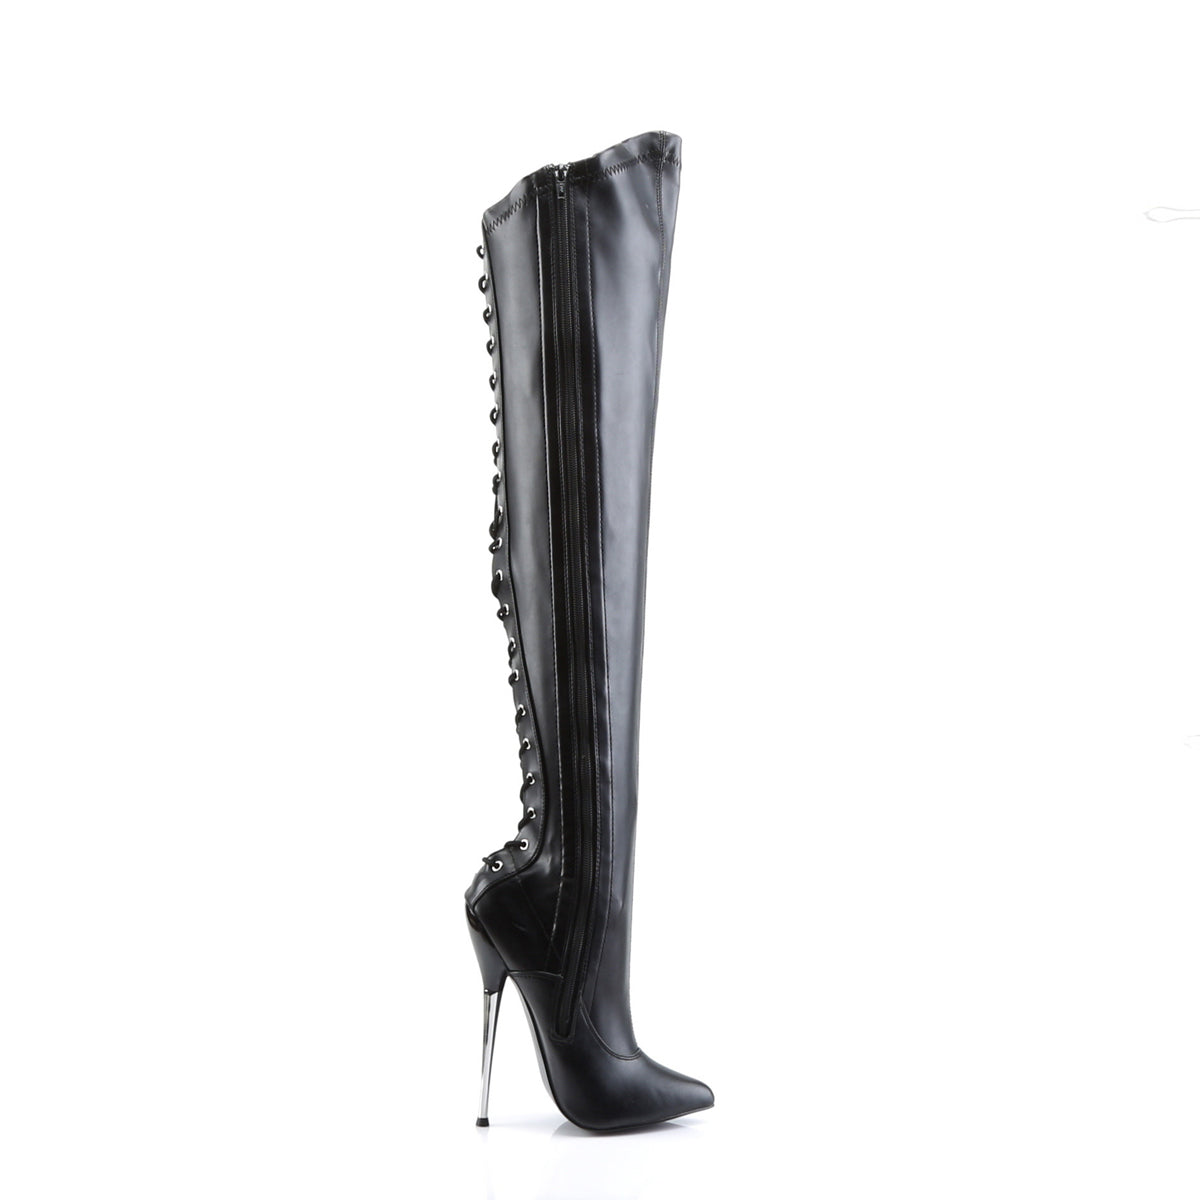 Devious Womens Boots DAGGER-3060 Blk Stretch Pu